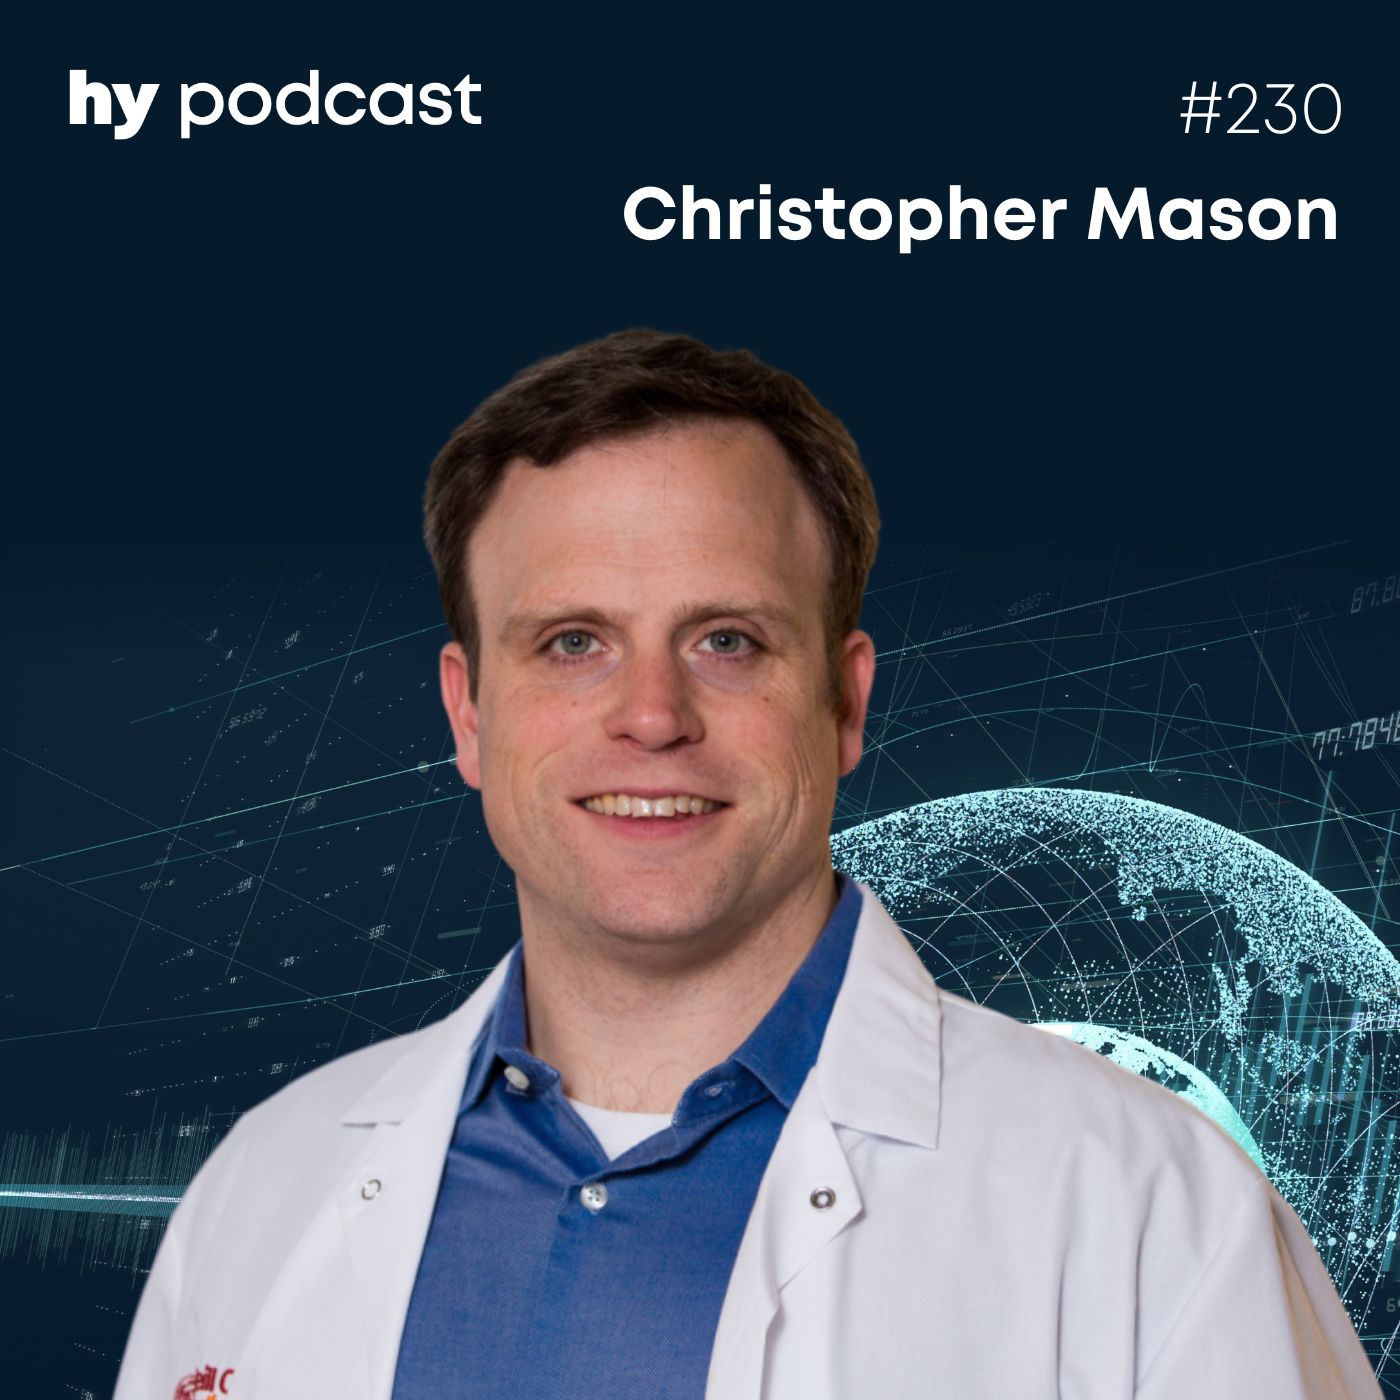 Folge 230 mit Christopher Mason: Krebs mit moderner Biologie bekämpfen